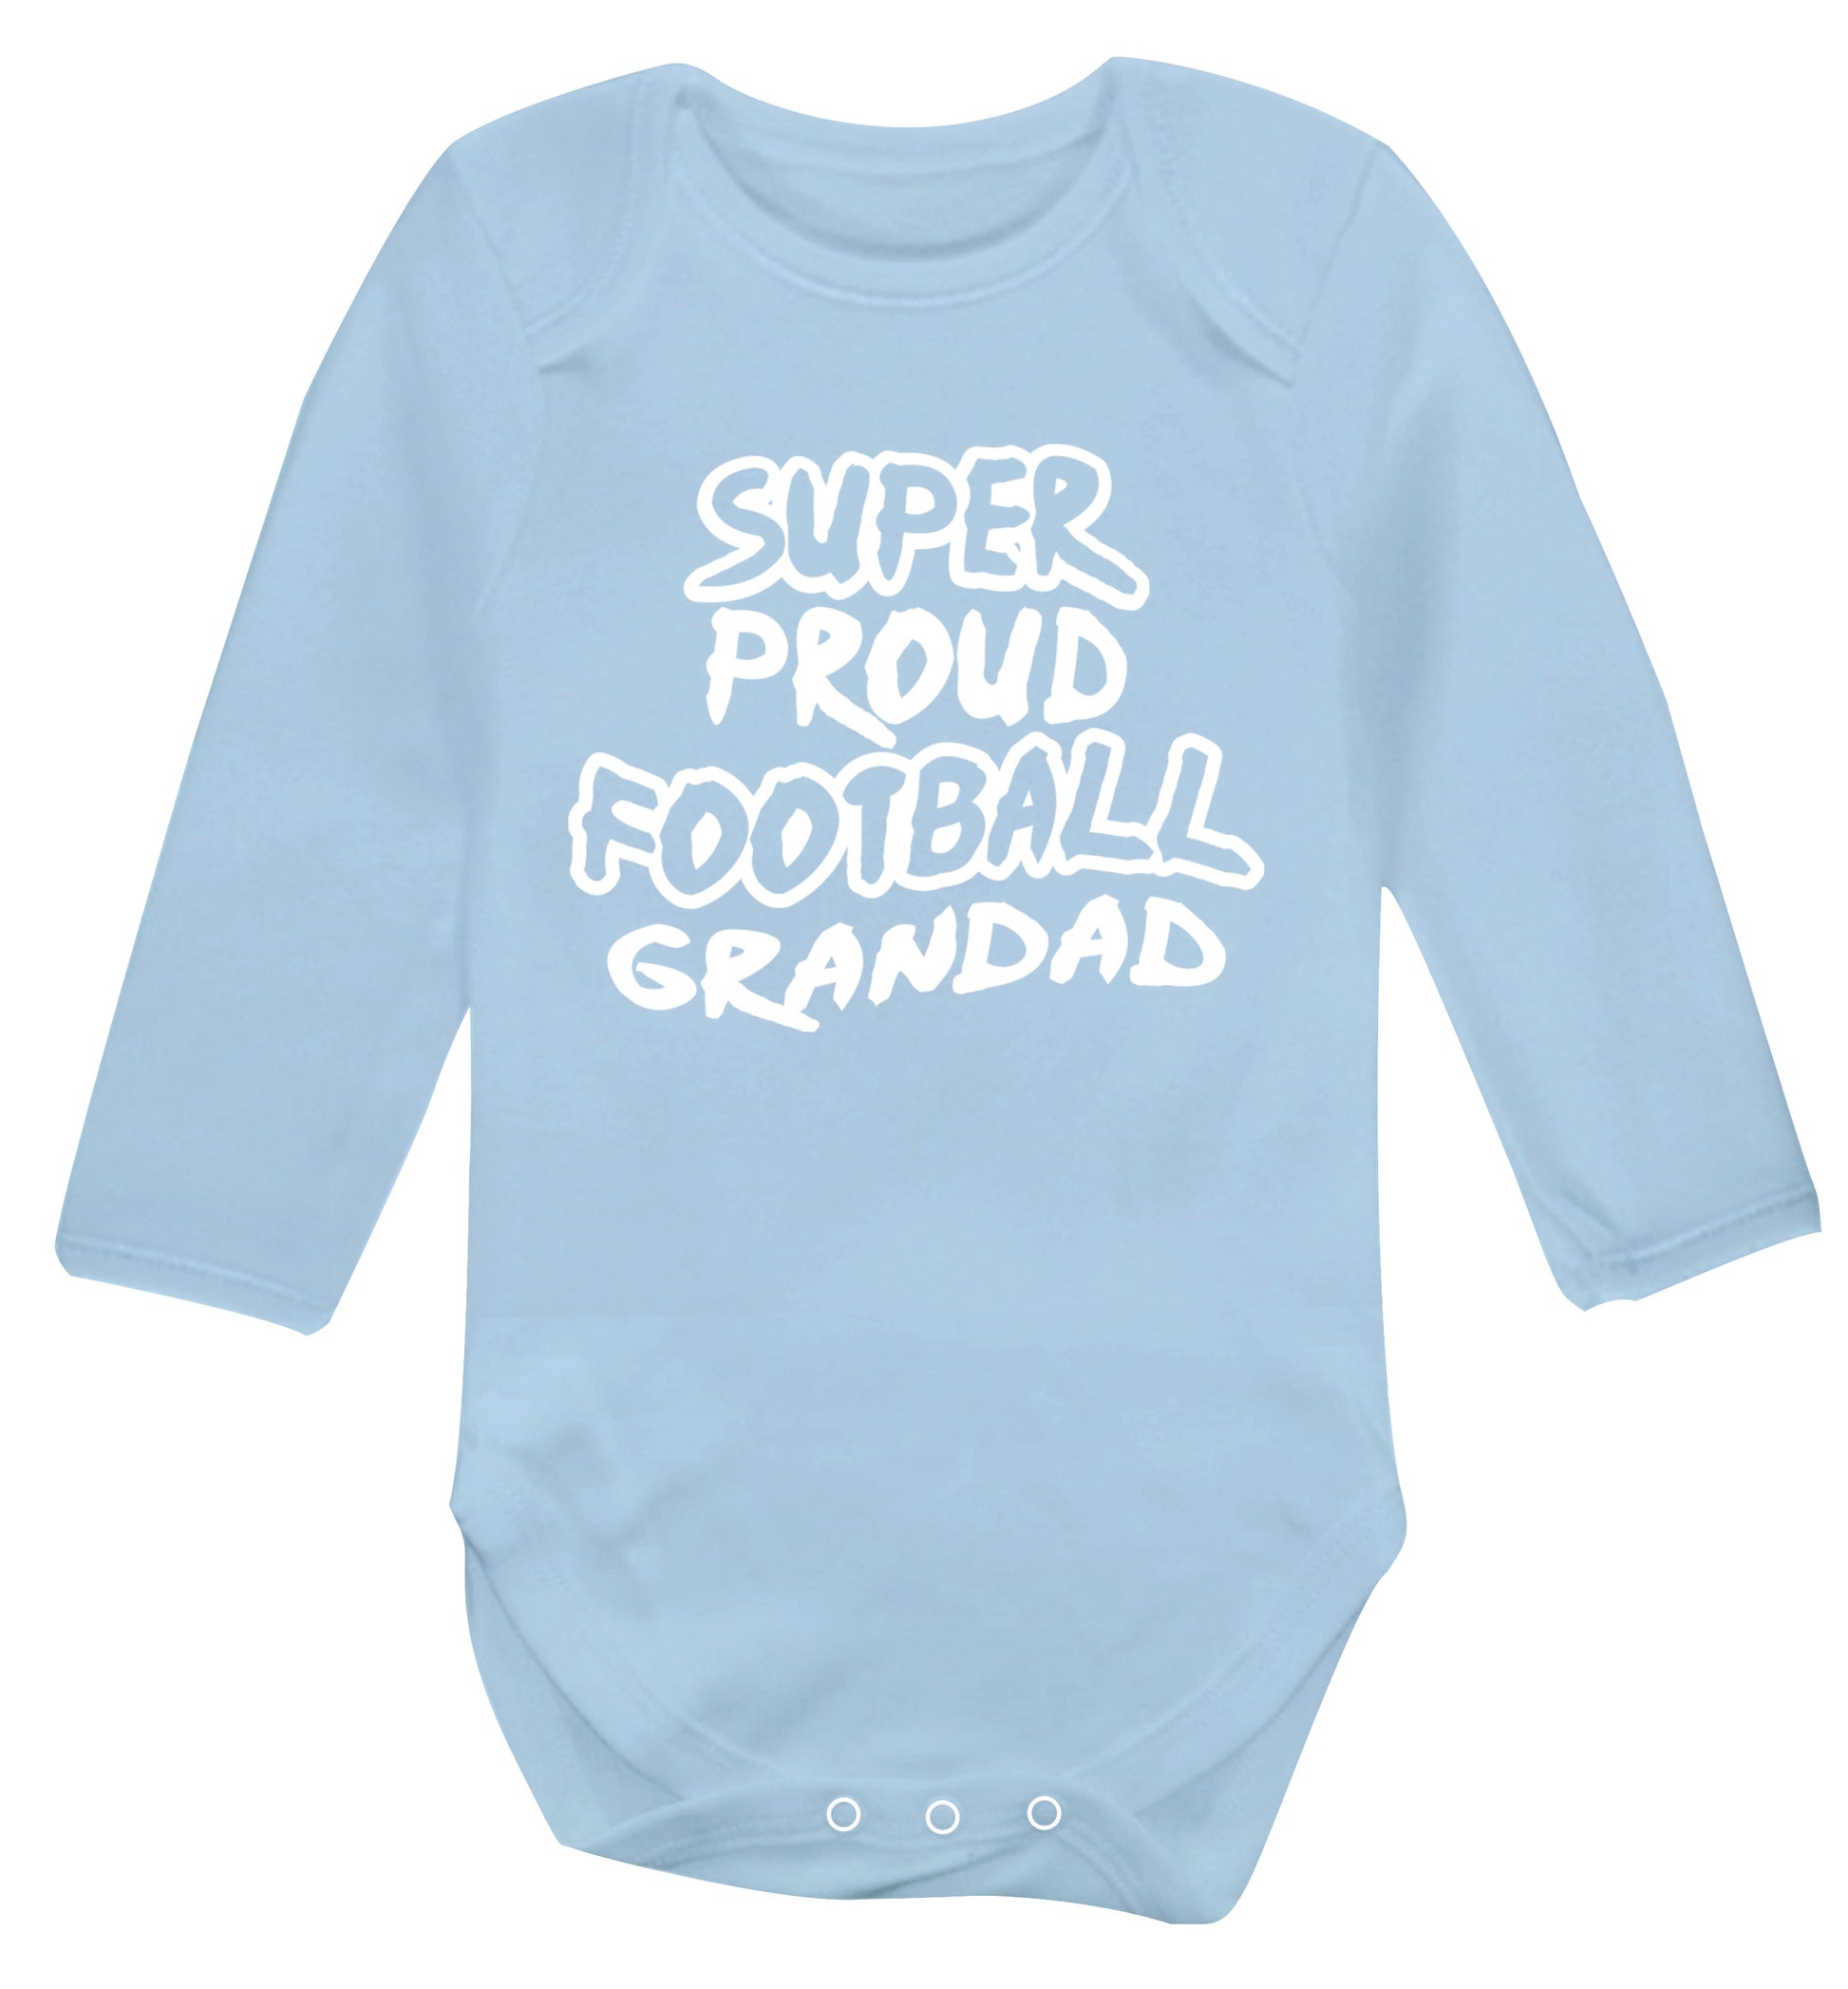 Super proud football grandad Baby Vest long sleeved pale blue 6-12 months